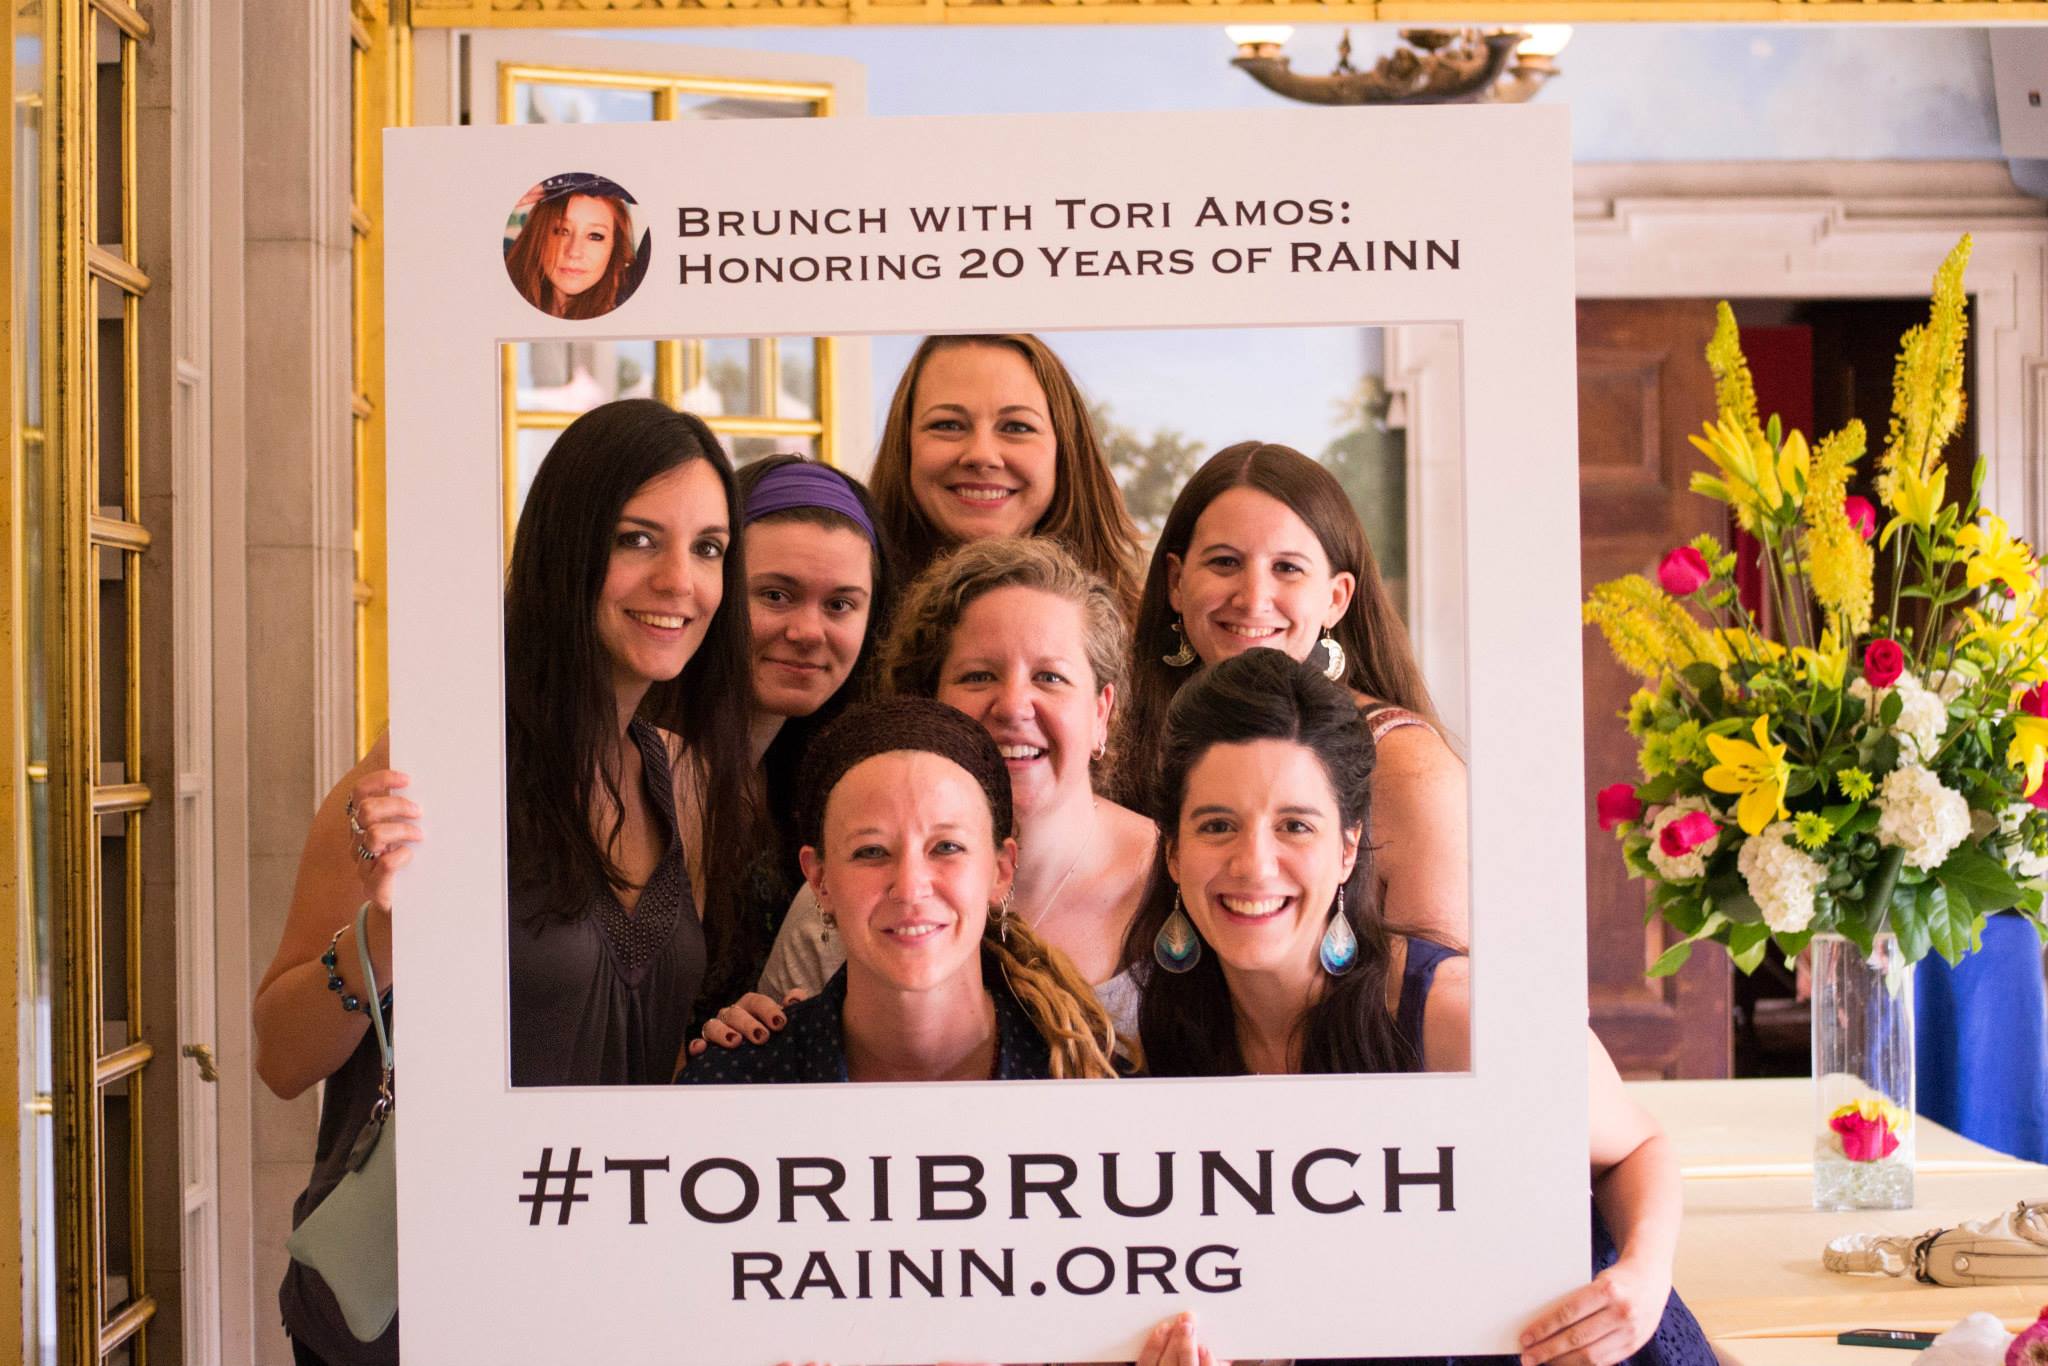 Women pose with a sign stating "Brunch with Tori Amos: Honoring 20 years of RAINN, hashtag ToriBrunch, rainn.org"